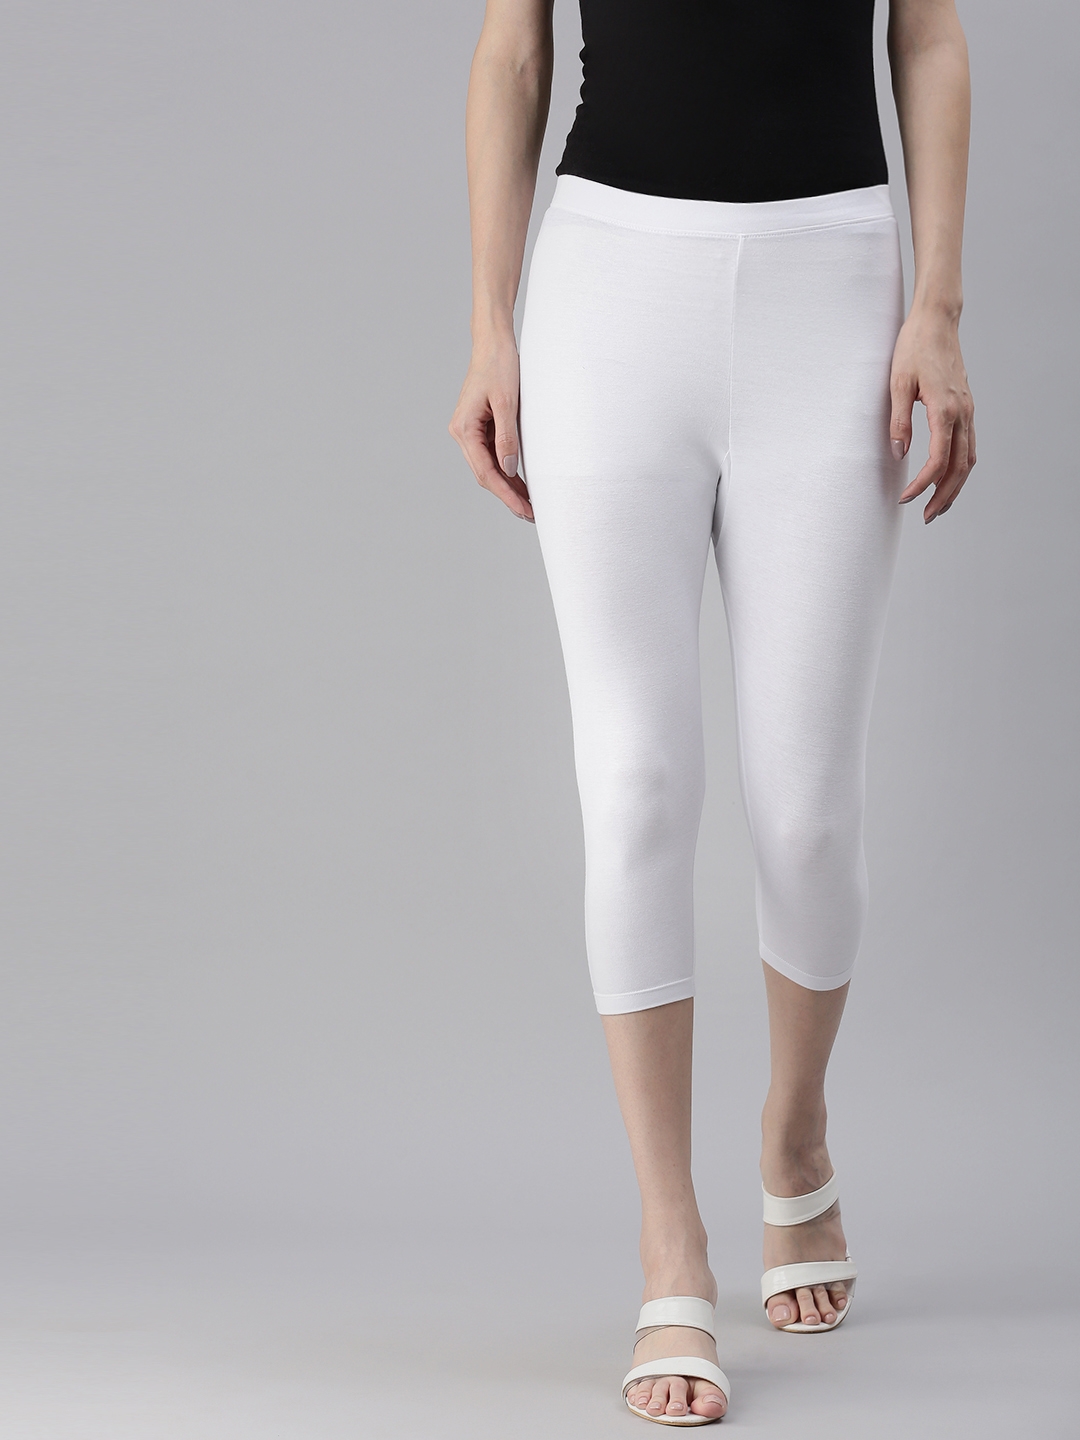 Kryptic Women Cotton Stretched Solid white colour capri length Legging